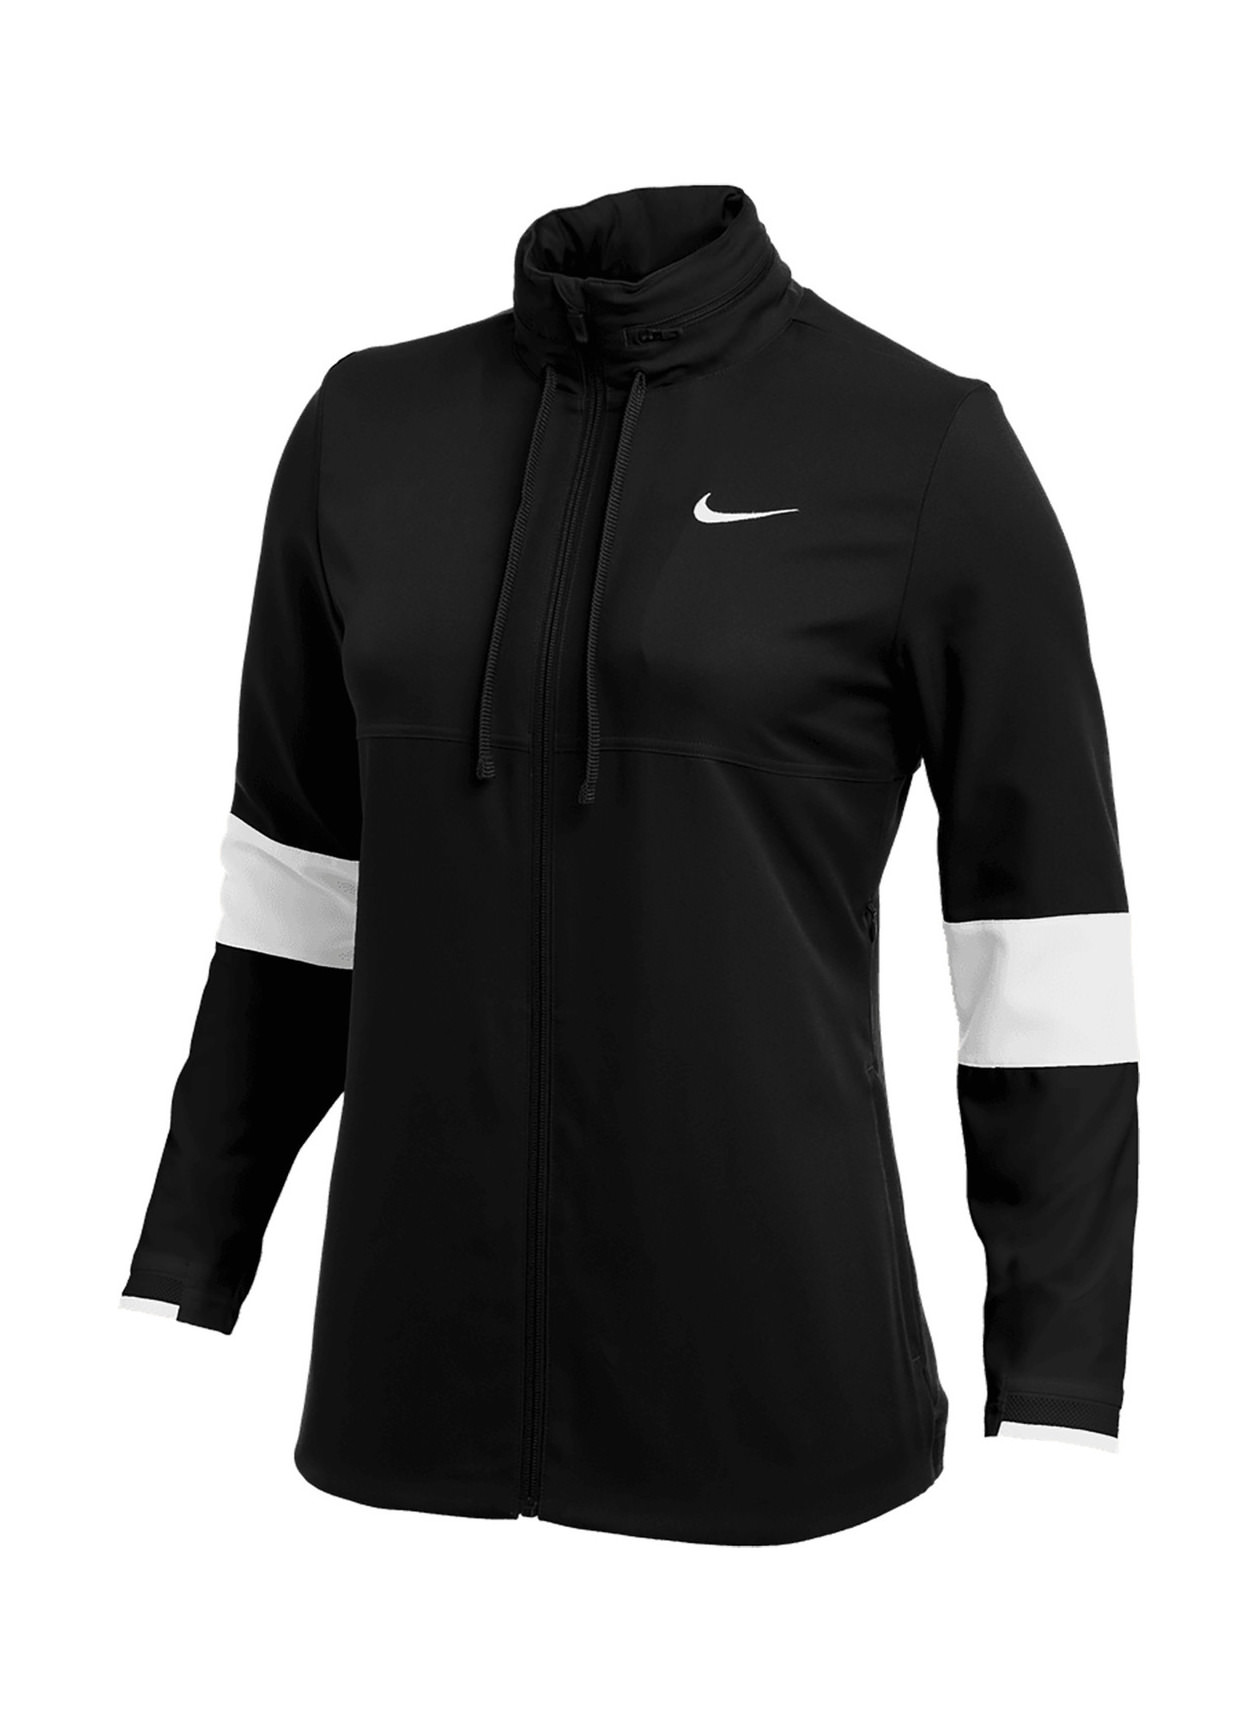 Nike Women's Black / White Dri-FIT Jacket